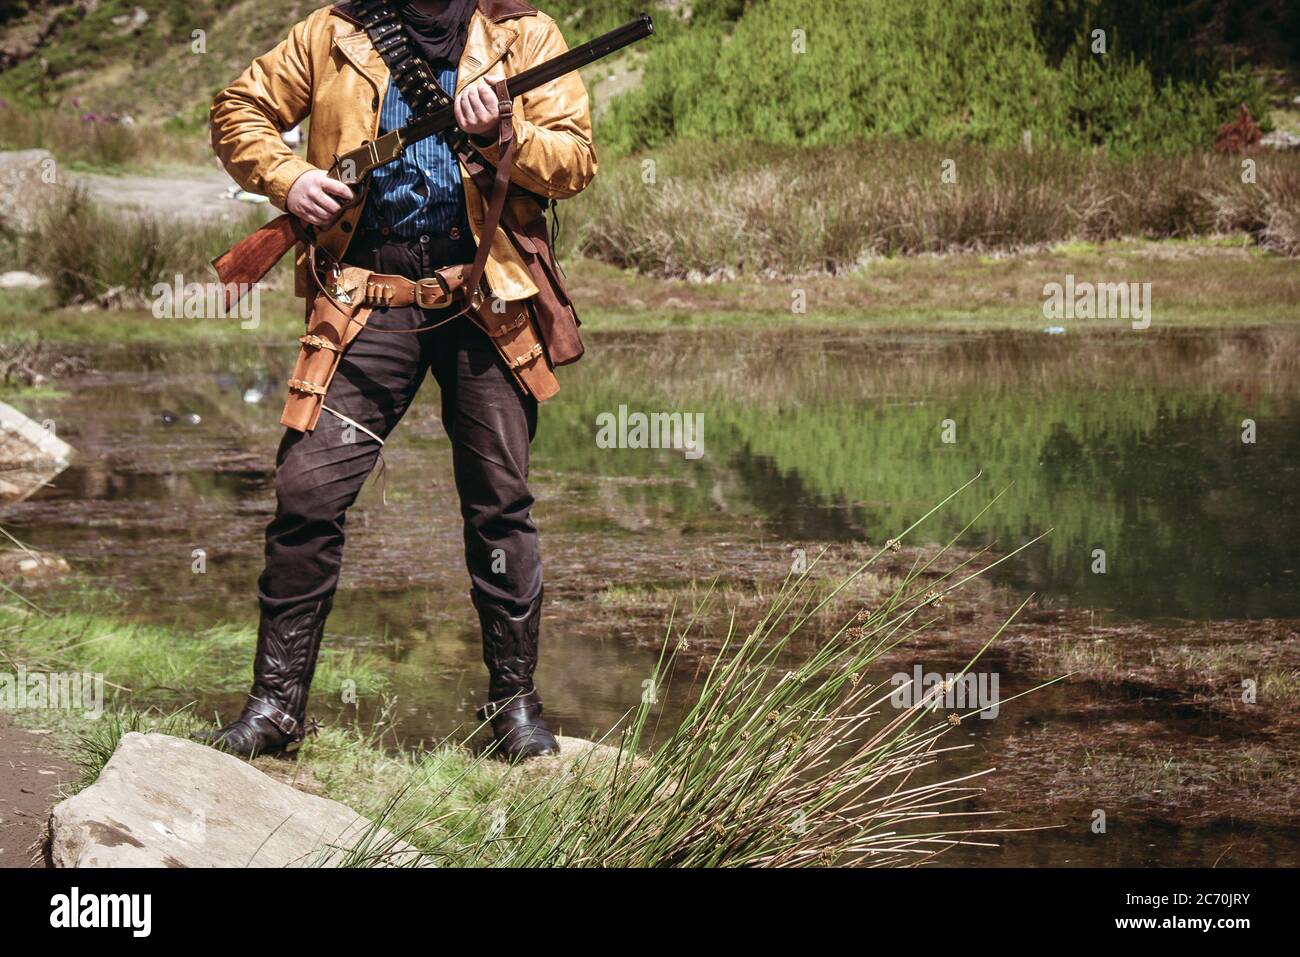 Wild West Cowboy Gunslinger Stock Photo